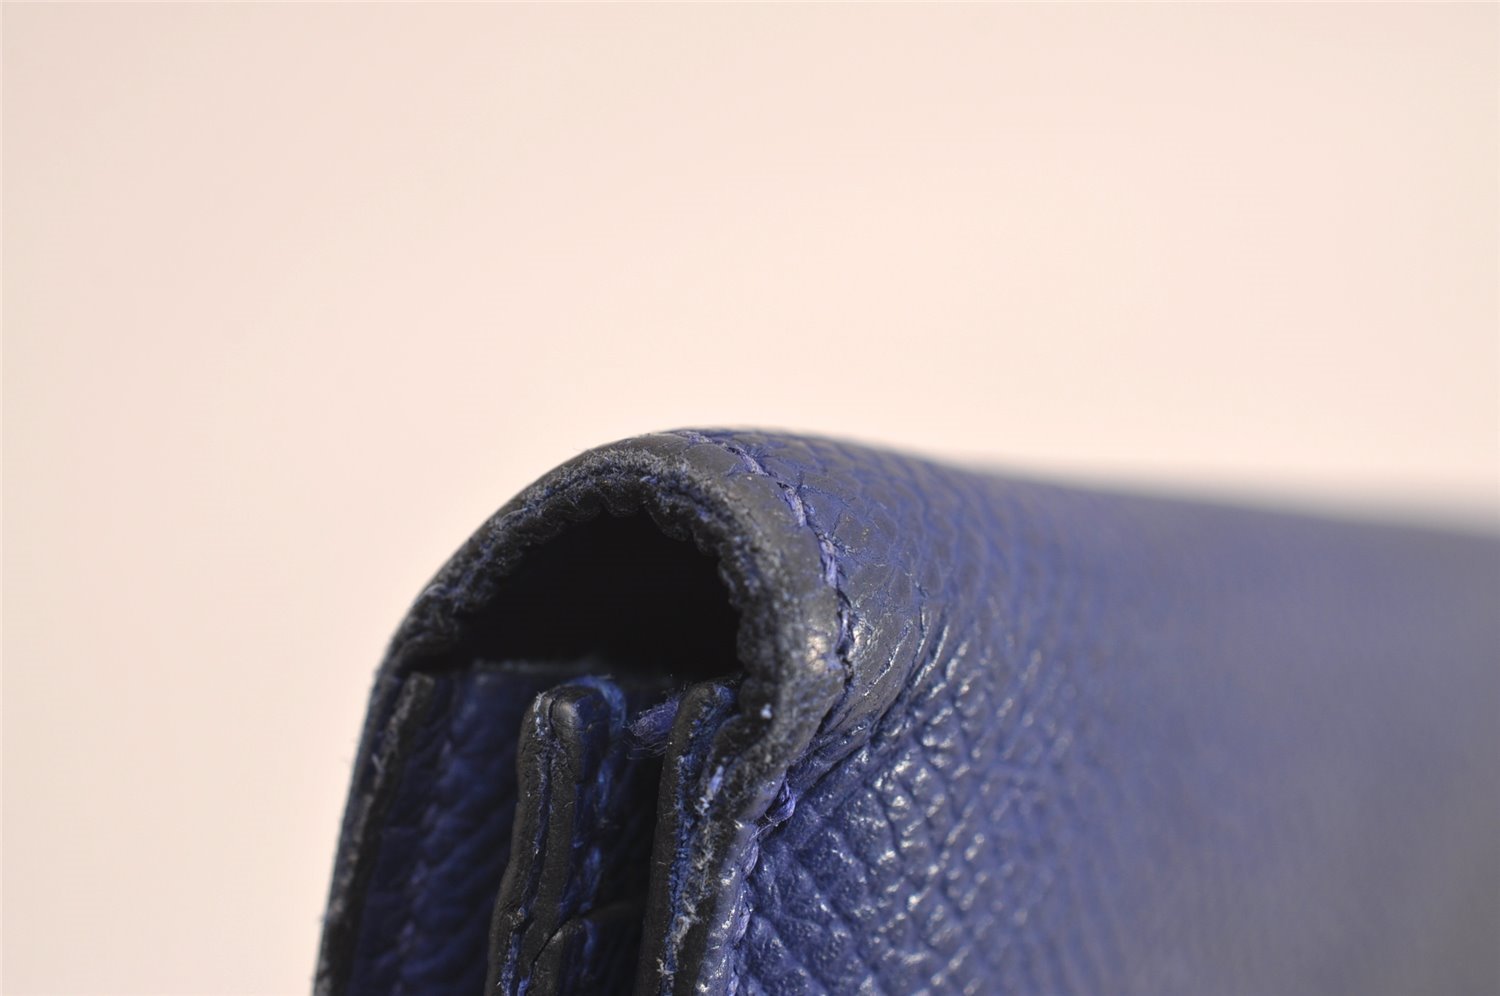 Authentic HERMES Bearn Soufflet Vintage Leather Long Wallet Purse Blue 3991J